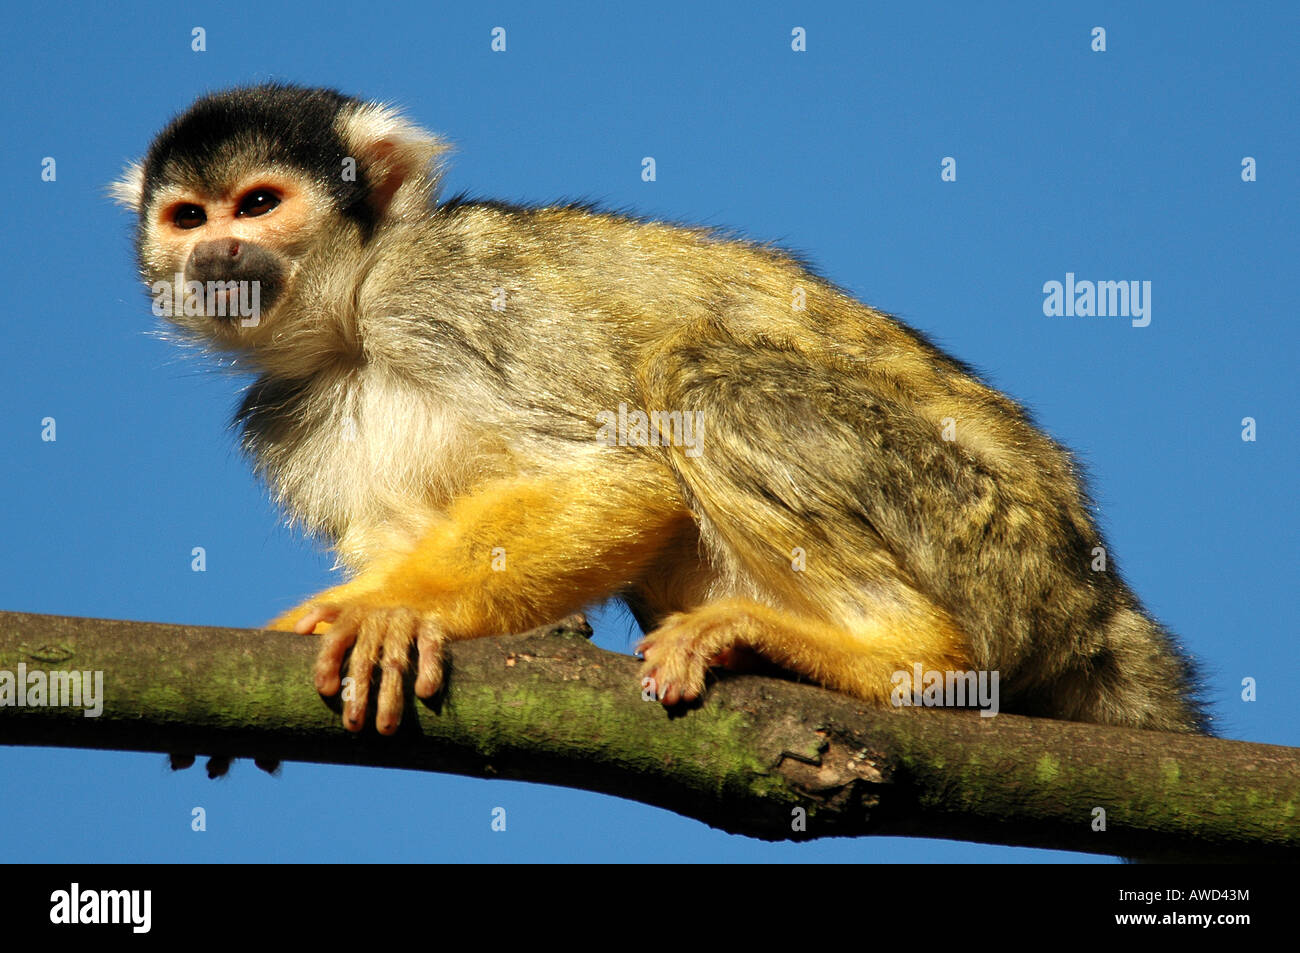 Common Squirrel Monkey (Saimiri sciureus), Nuremberg Zoo, Nuremberg, Bavaria, Germany, Europe Stock Photo